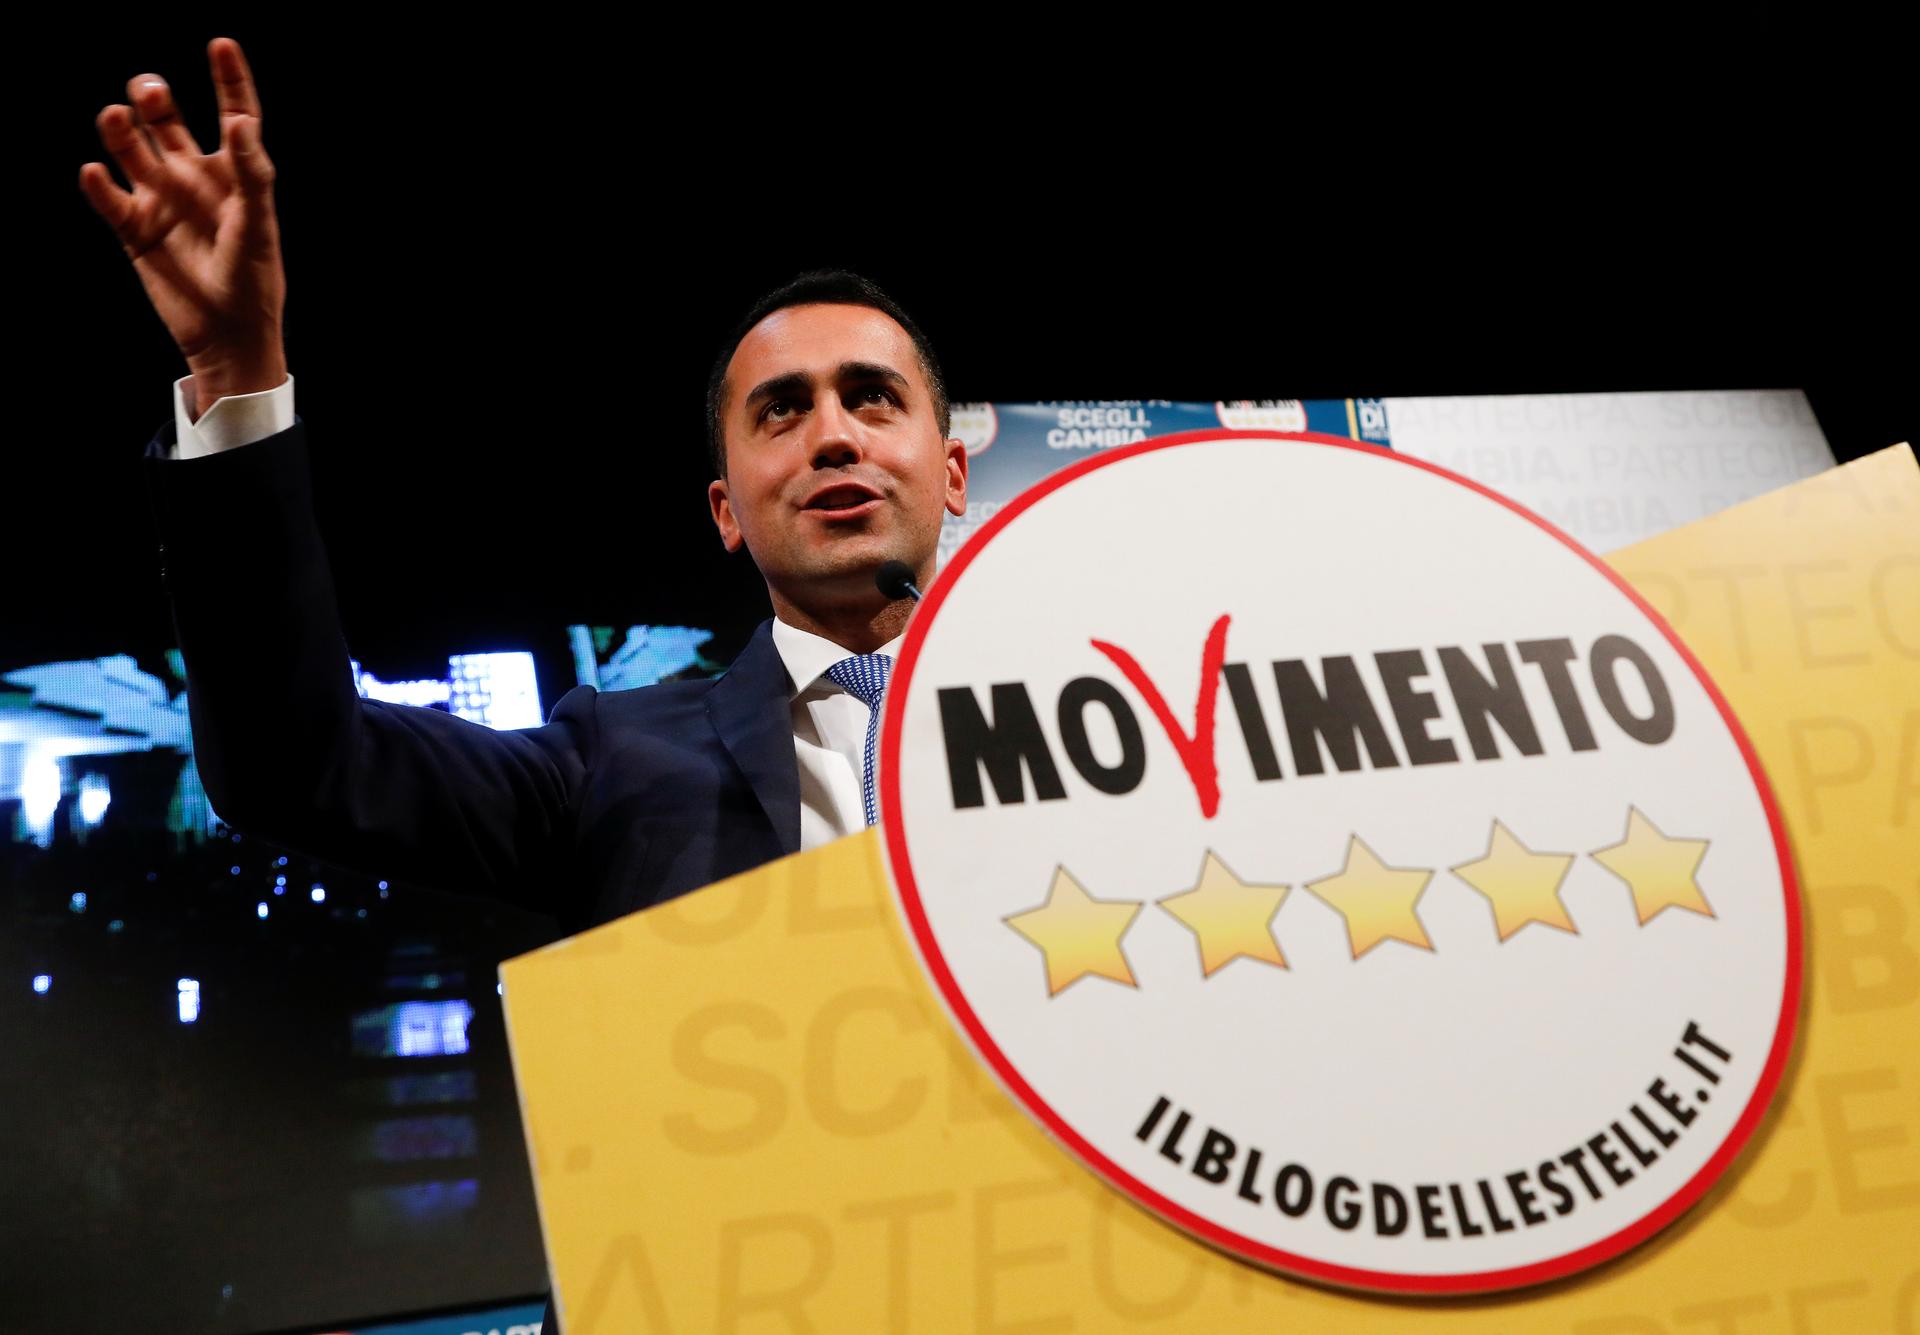 Five Star Movement leader Luigi Di Maio speaks during an electoral rally